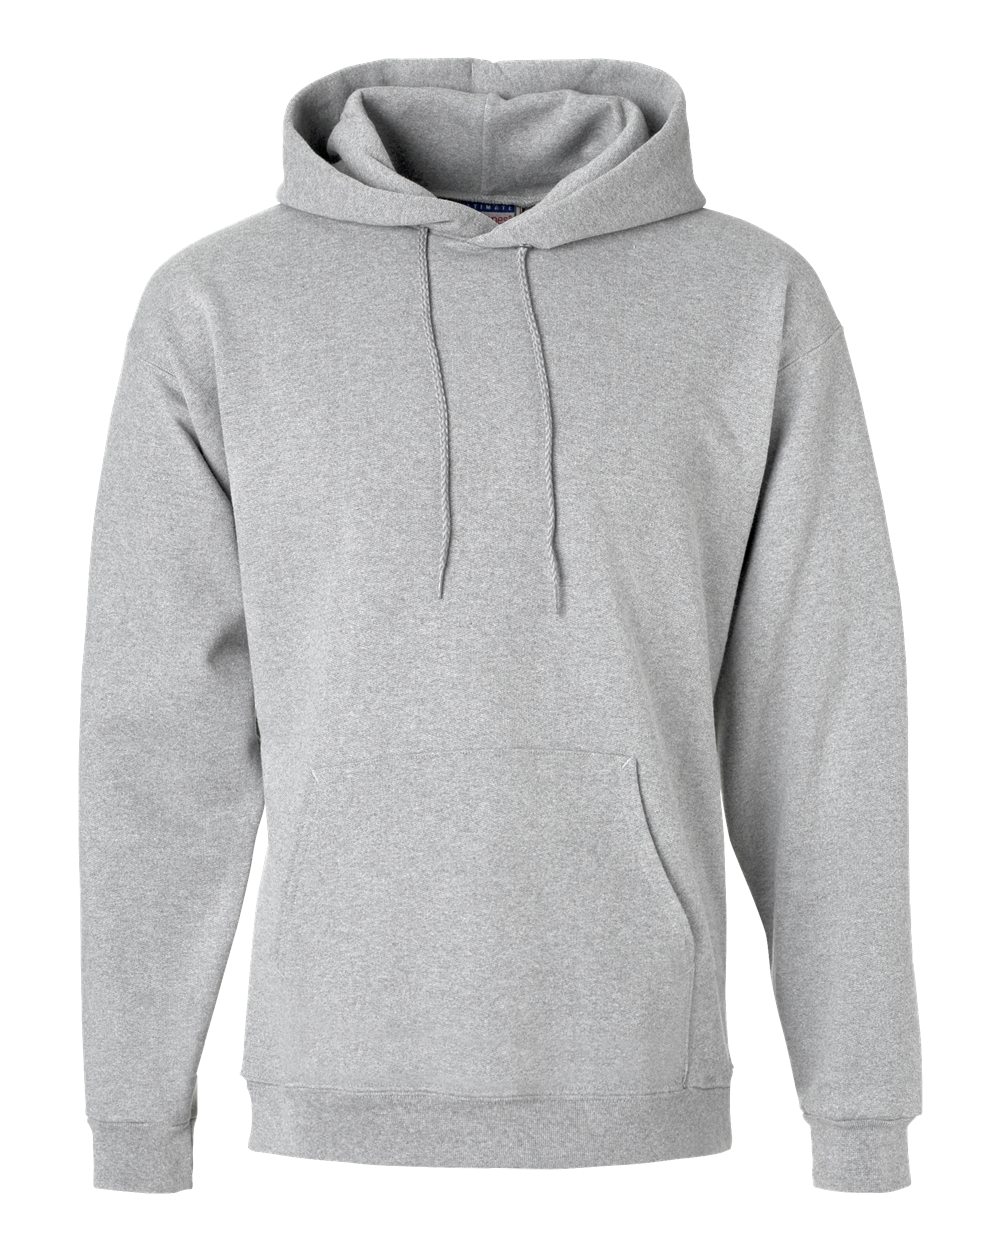 Hanes - PrintProXP Ultimate Cotton Hooded Sweatshirt - F170 | eBay